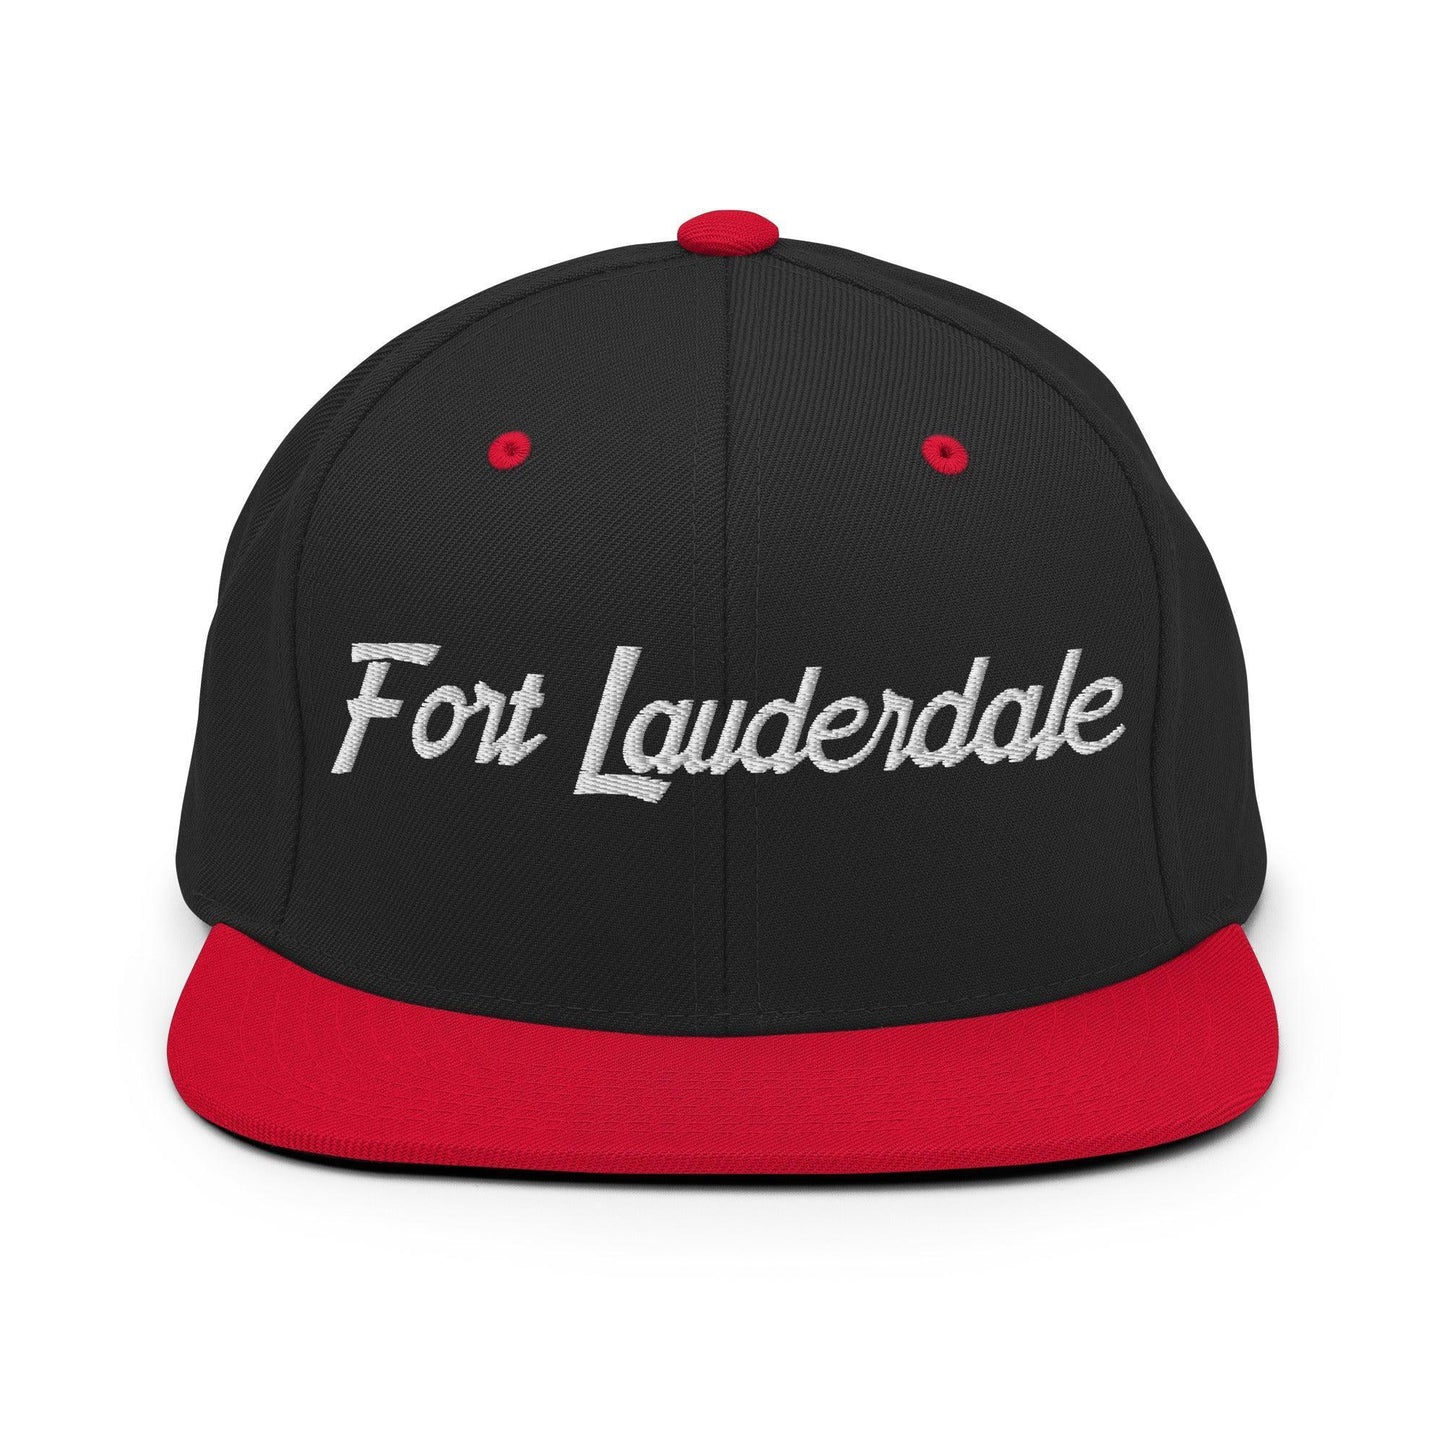 Fort Lauderdale Script Snapback Hat Black Red